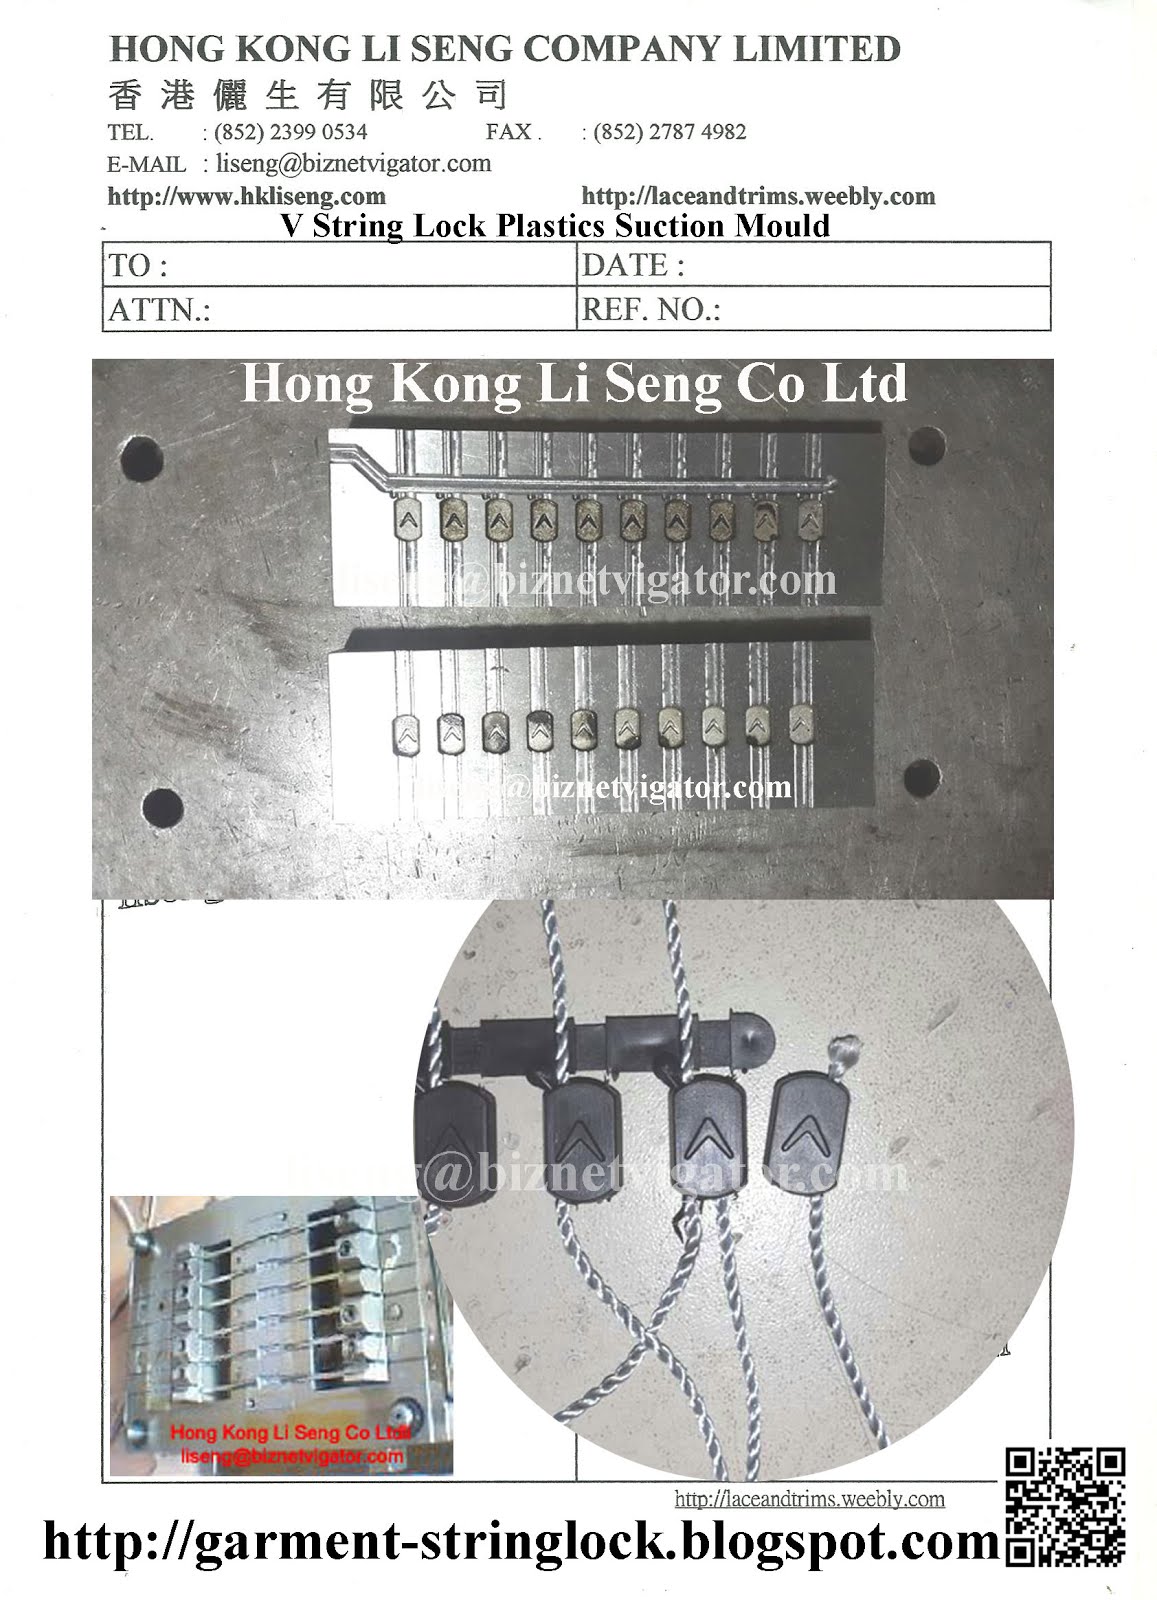 Professional Custom Made String Lock Mould